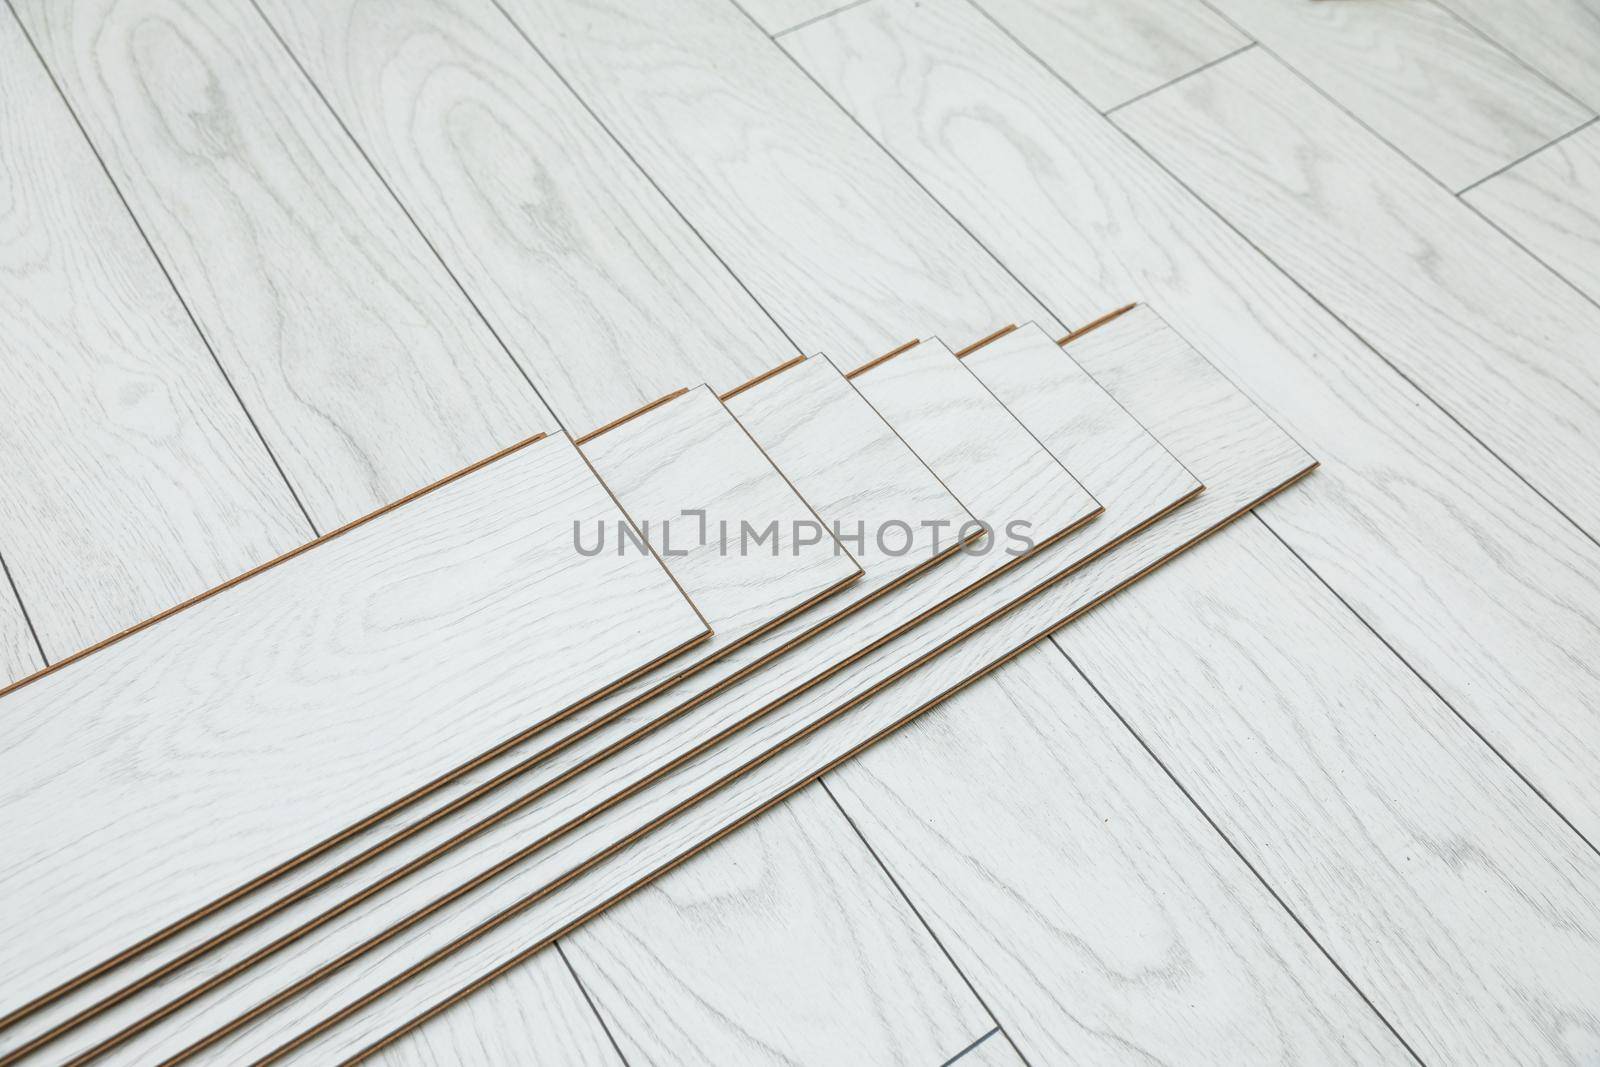 White wood laminates on the floor